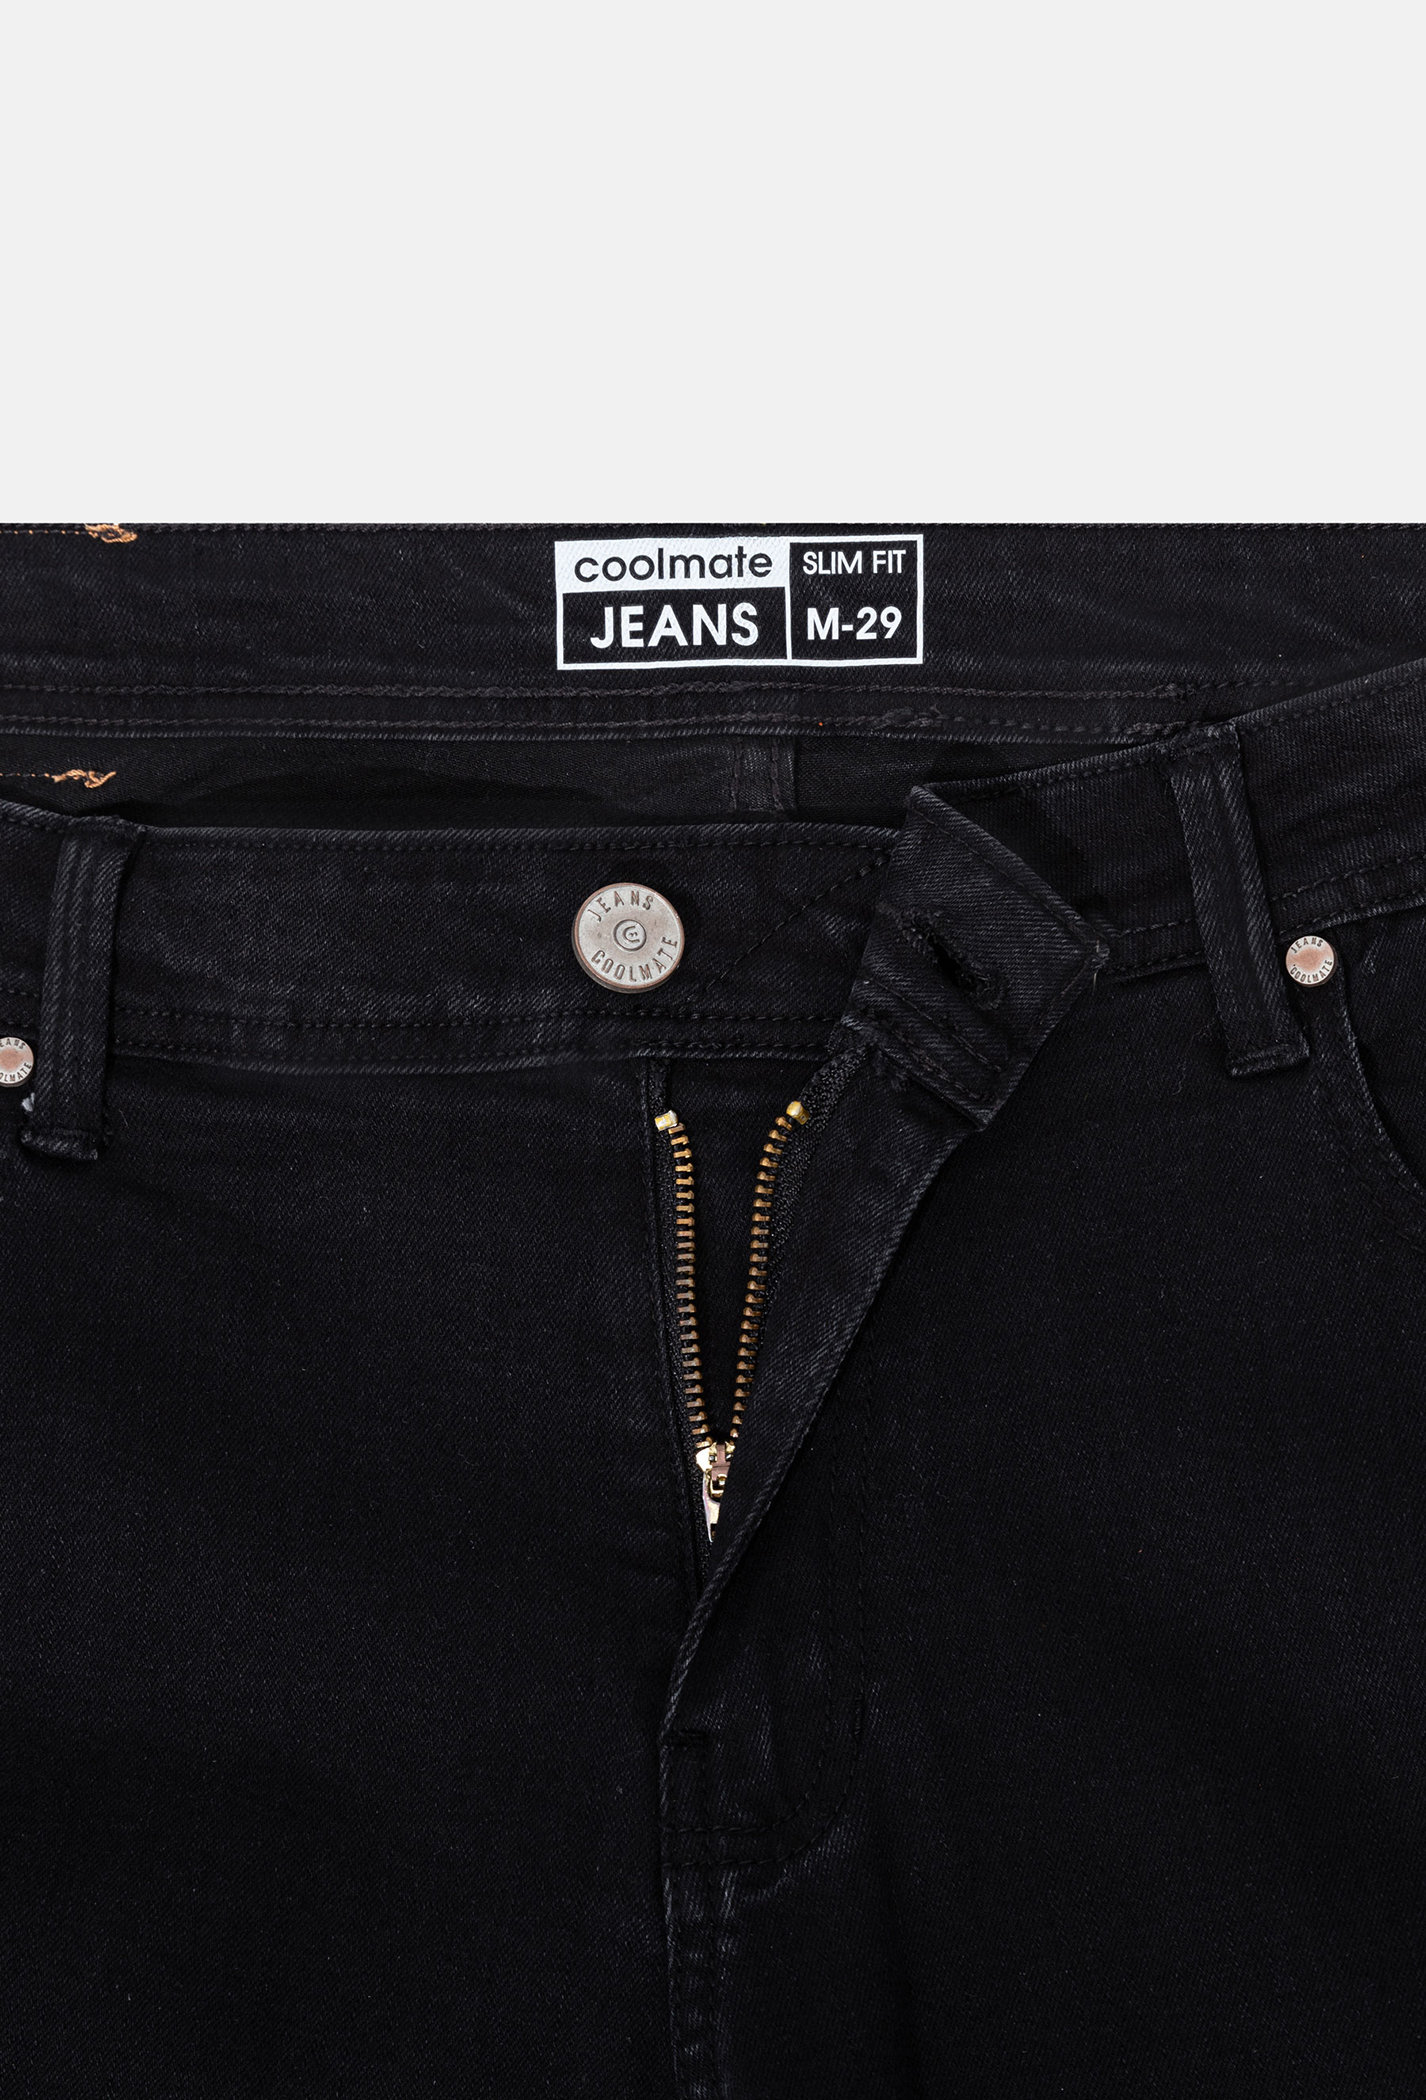 SĂN DEAL - Quần Jeans Basic Slim  Đen 4